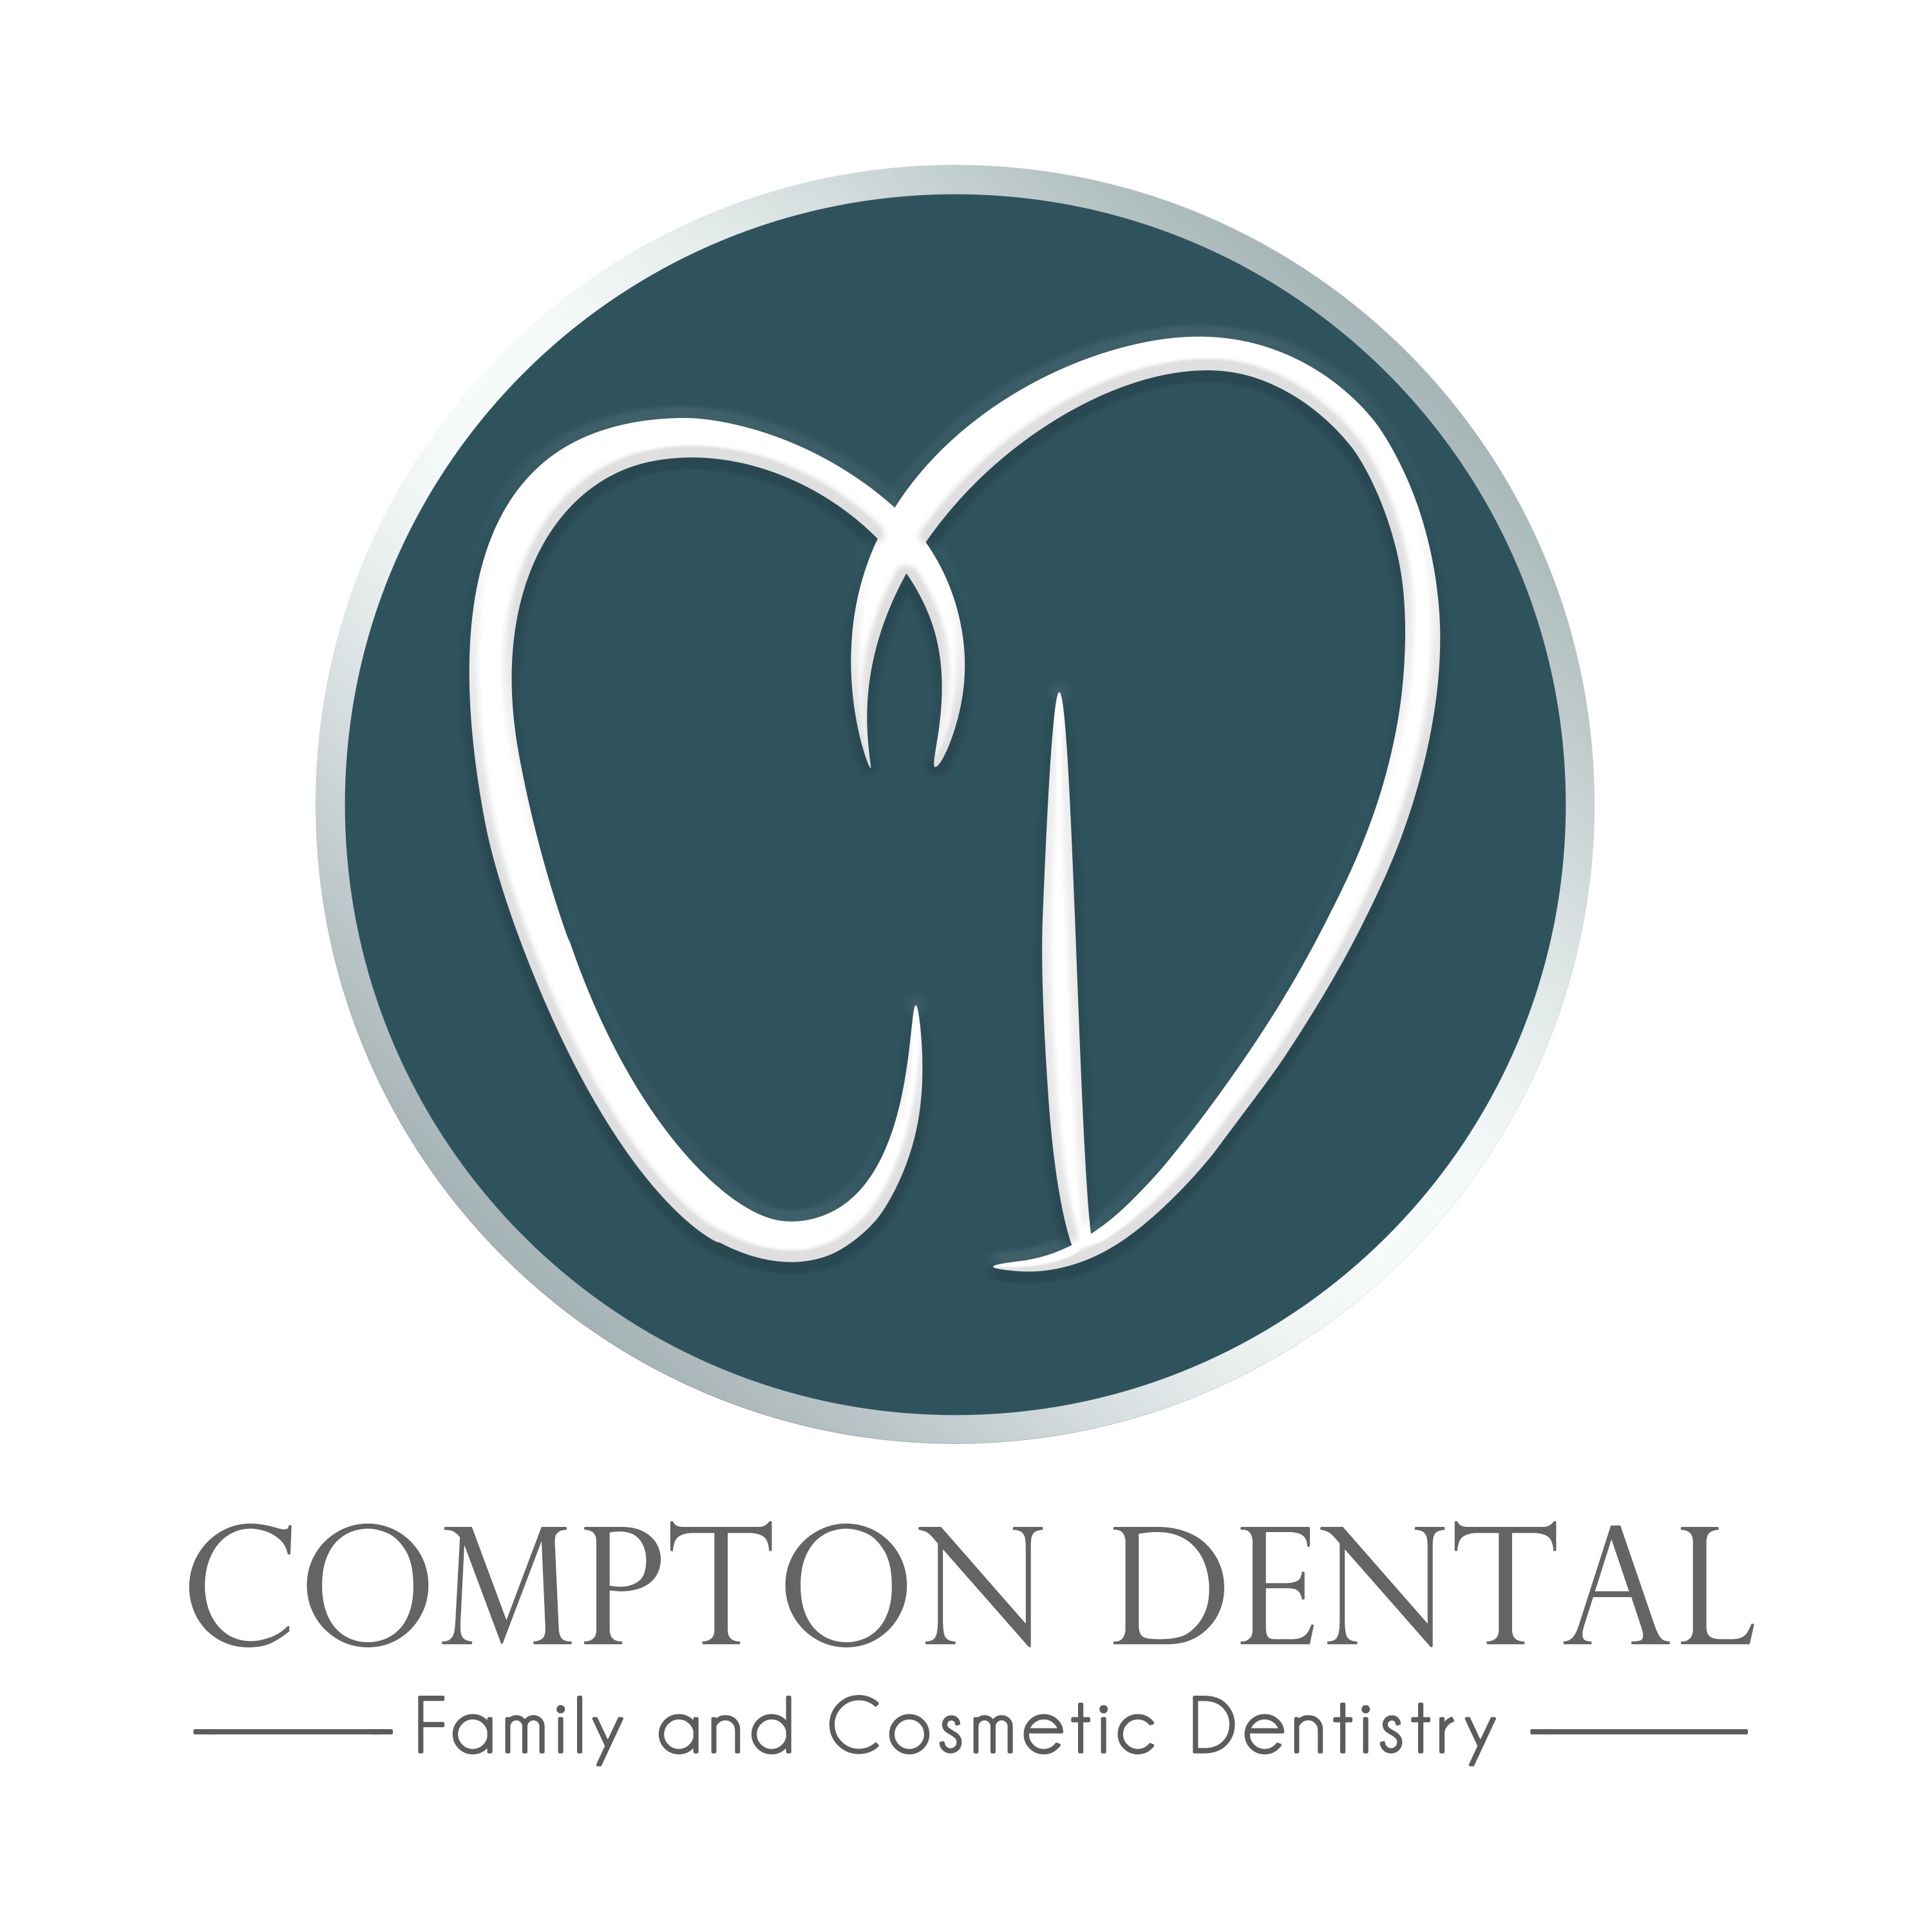 Compton Dental Family & Cosmetic Dentistry - Albertville, AL 35950 - (256)878-8804 | ShowMeLocal.com